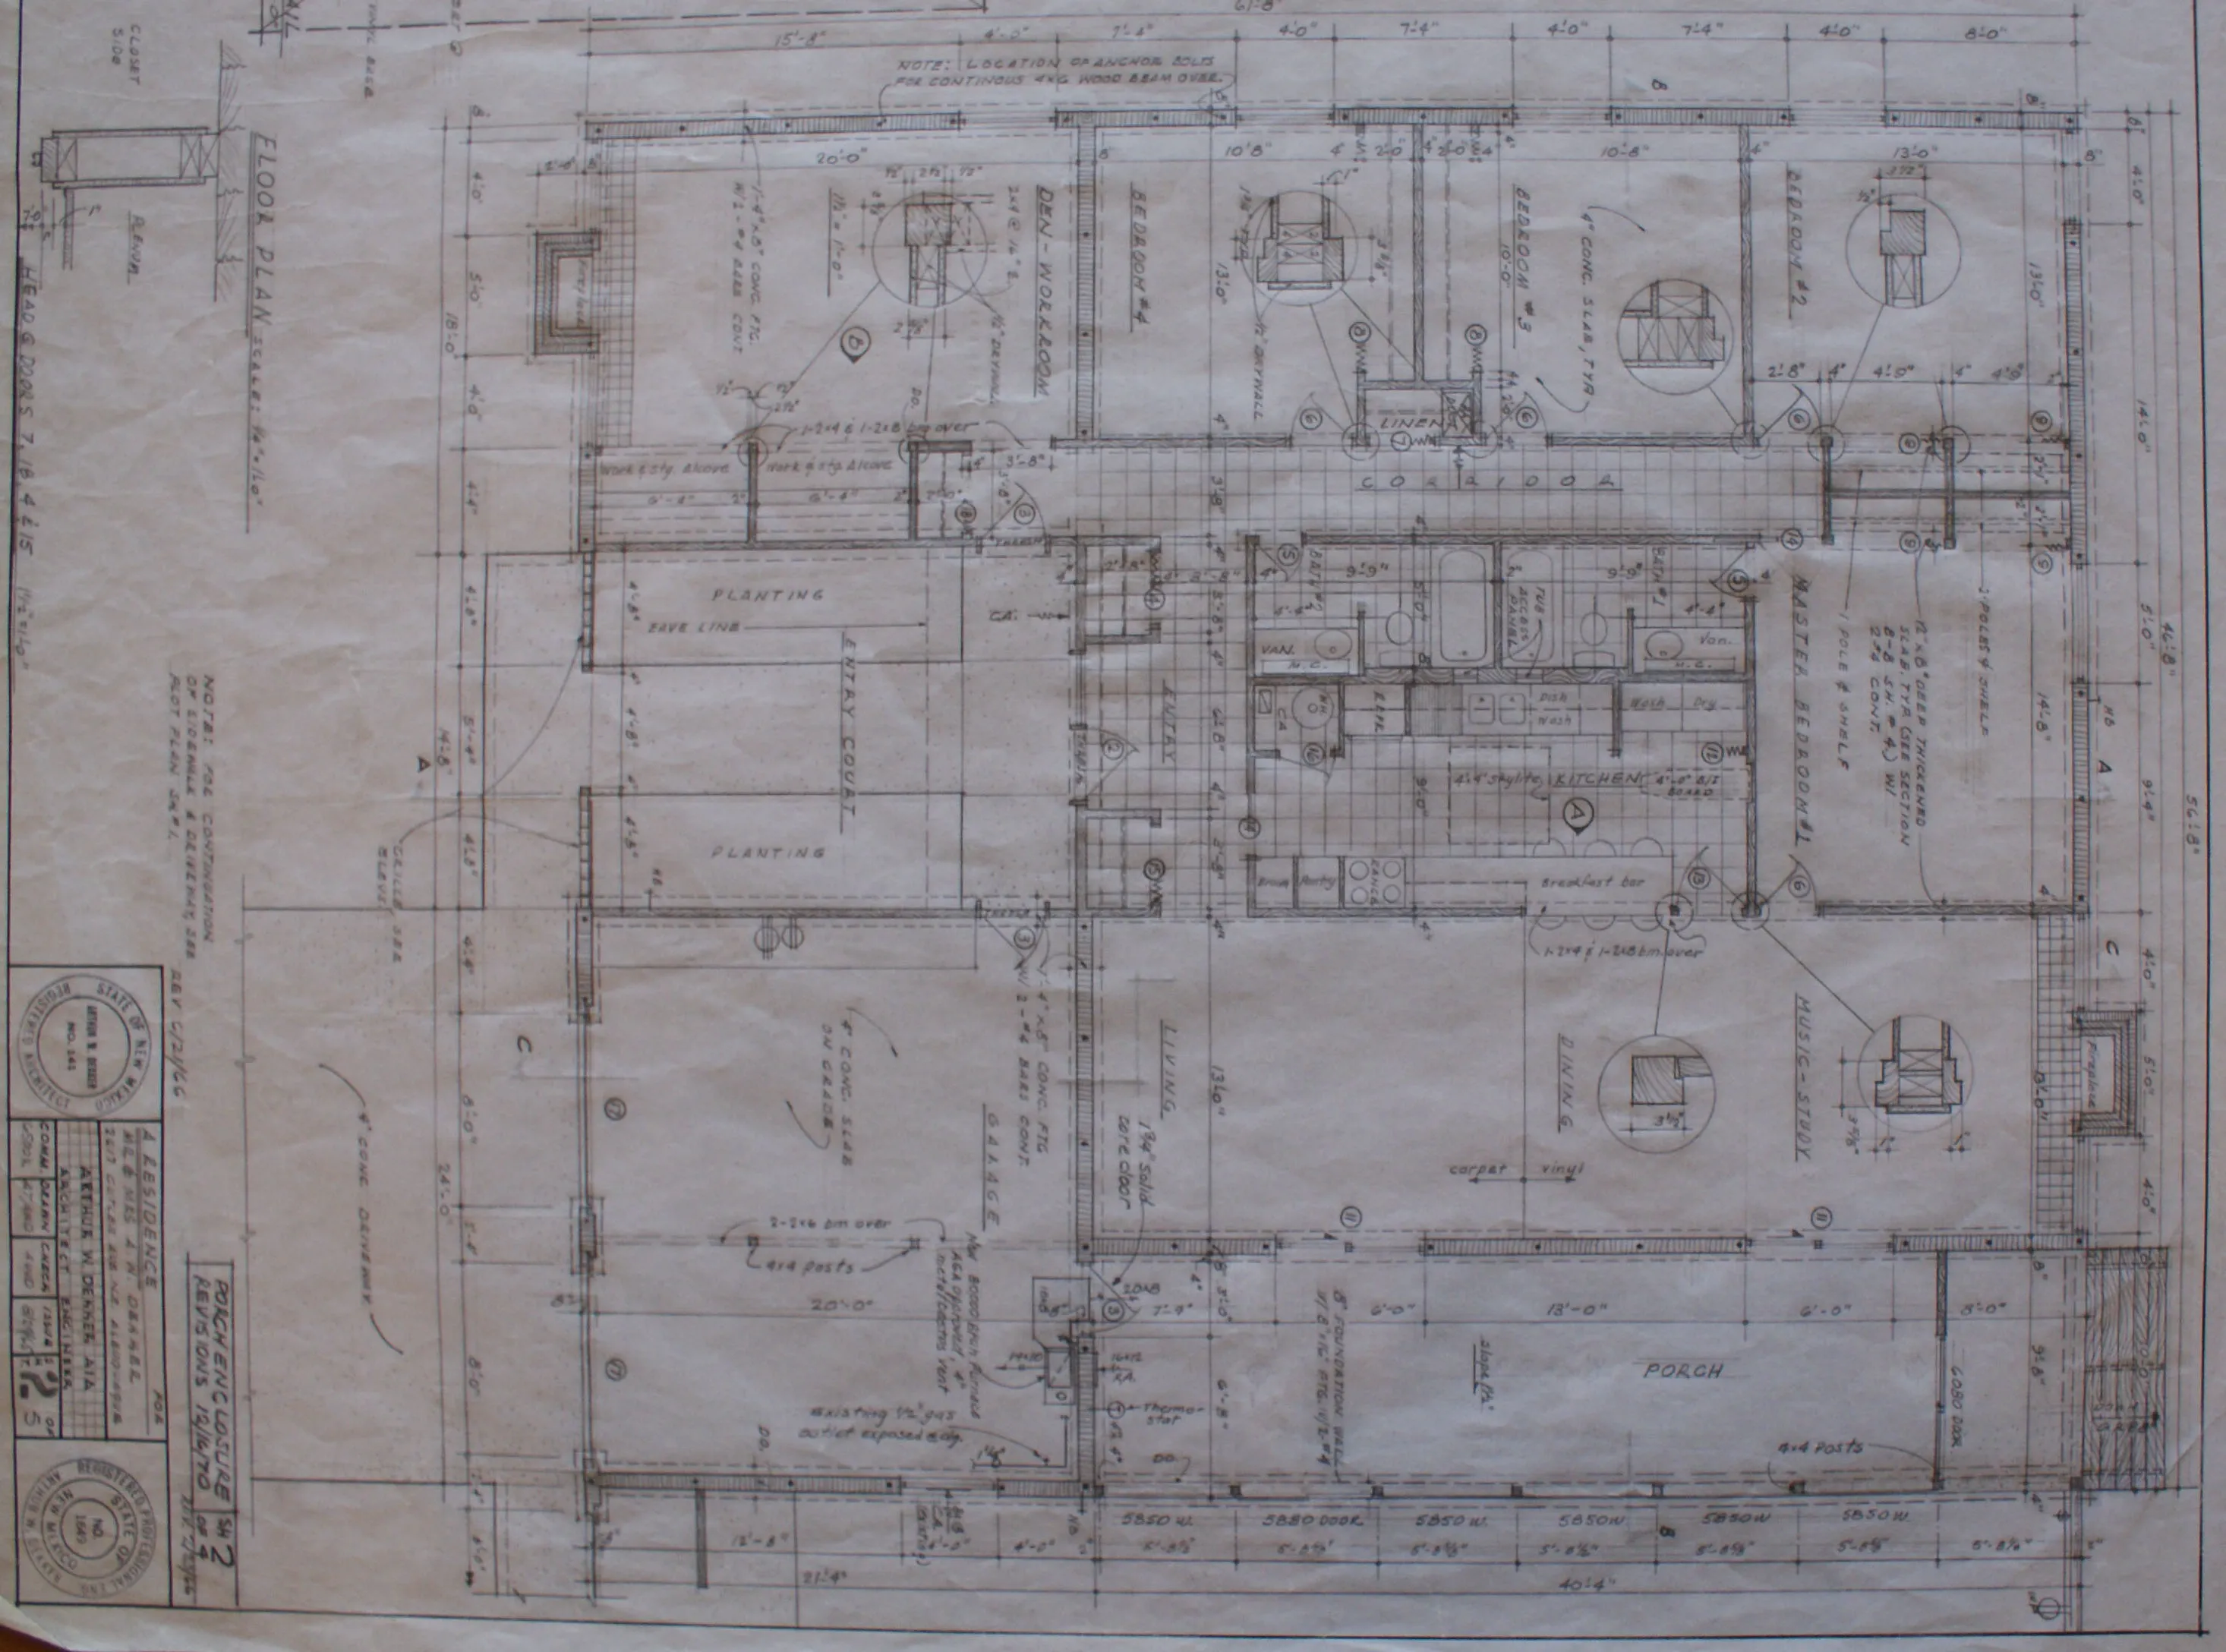 Floor plan showing detail of kitchen.